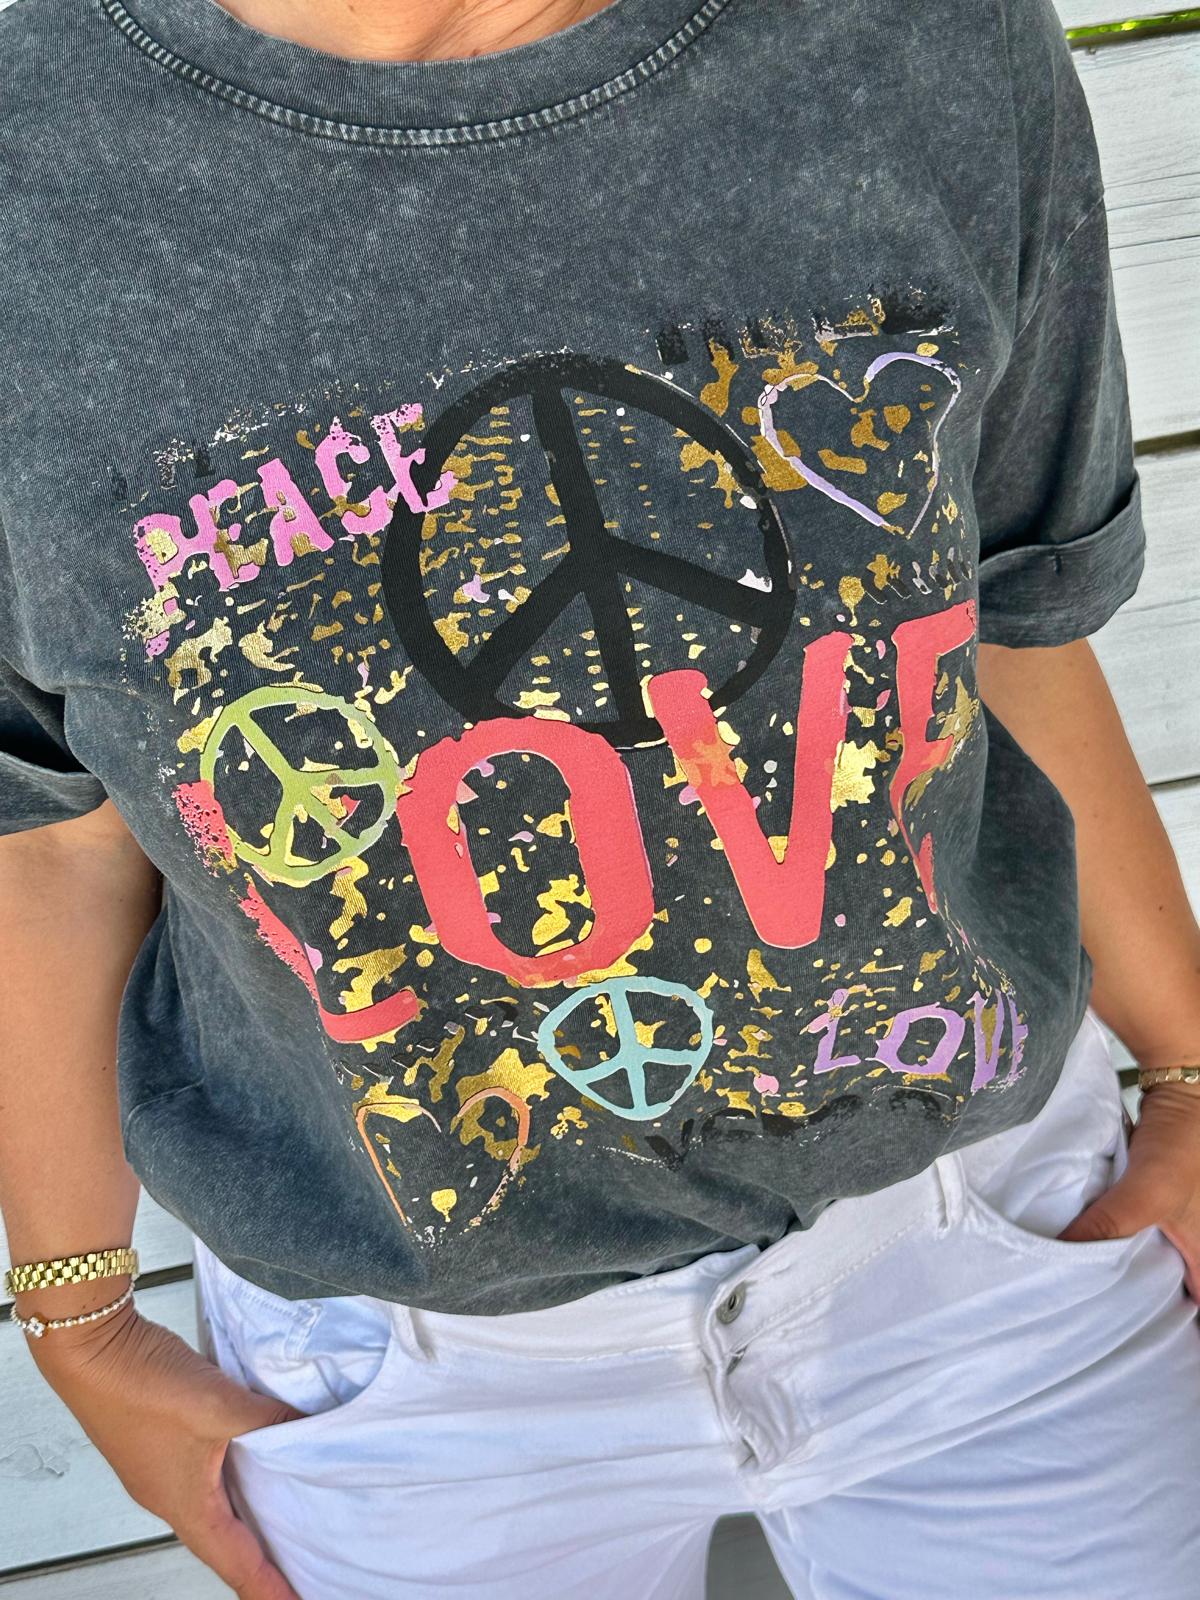 Zuckersüßes Onesize T-Shirt mit "Peace Love" Print in Stoned-washed